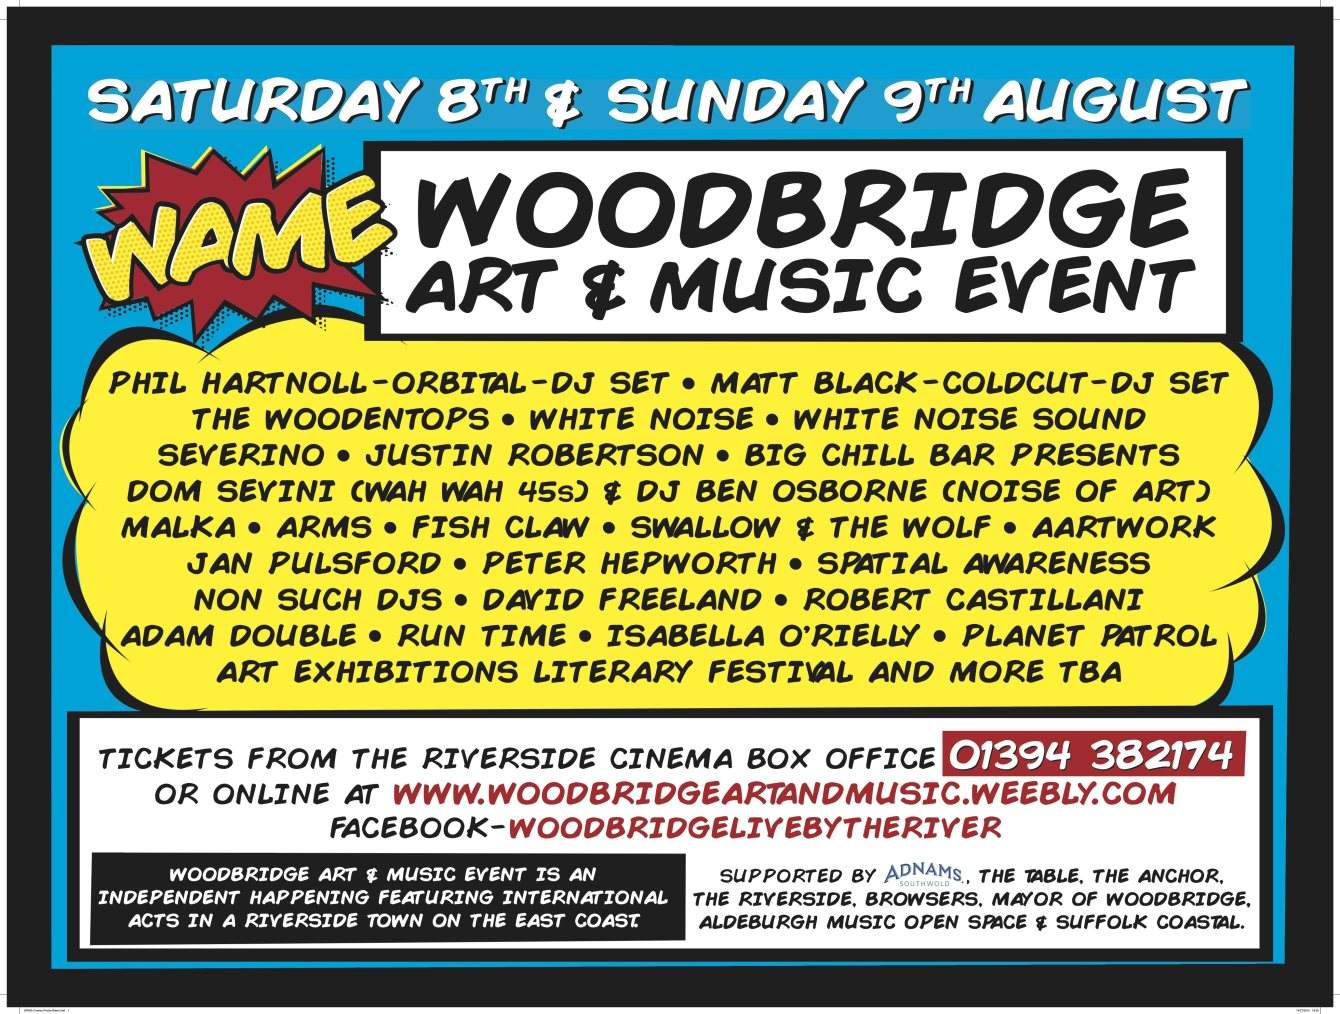 Woodbridge Art and Music Event 2015 - フライヤー表